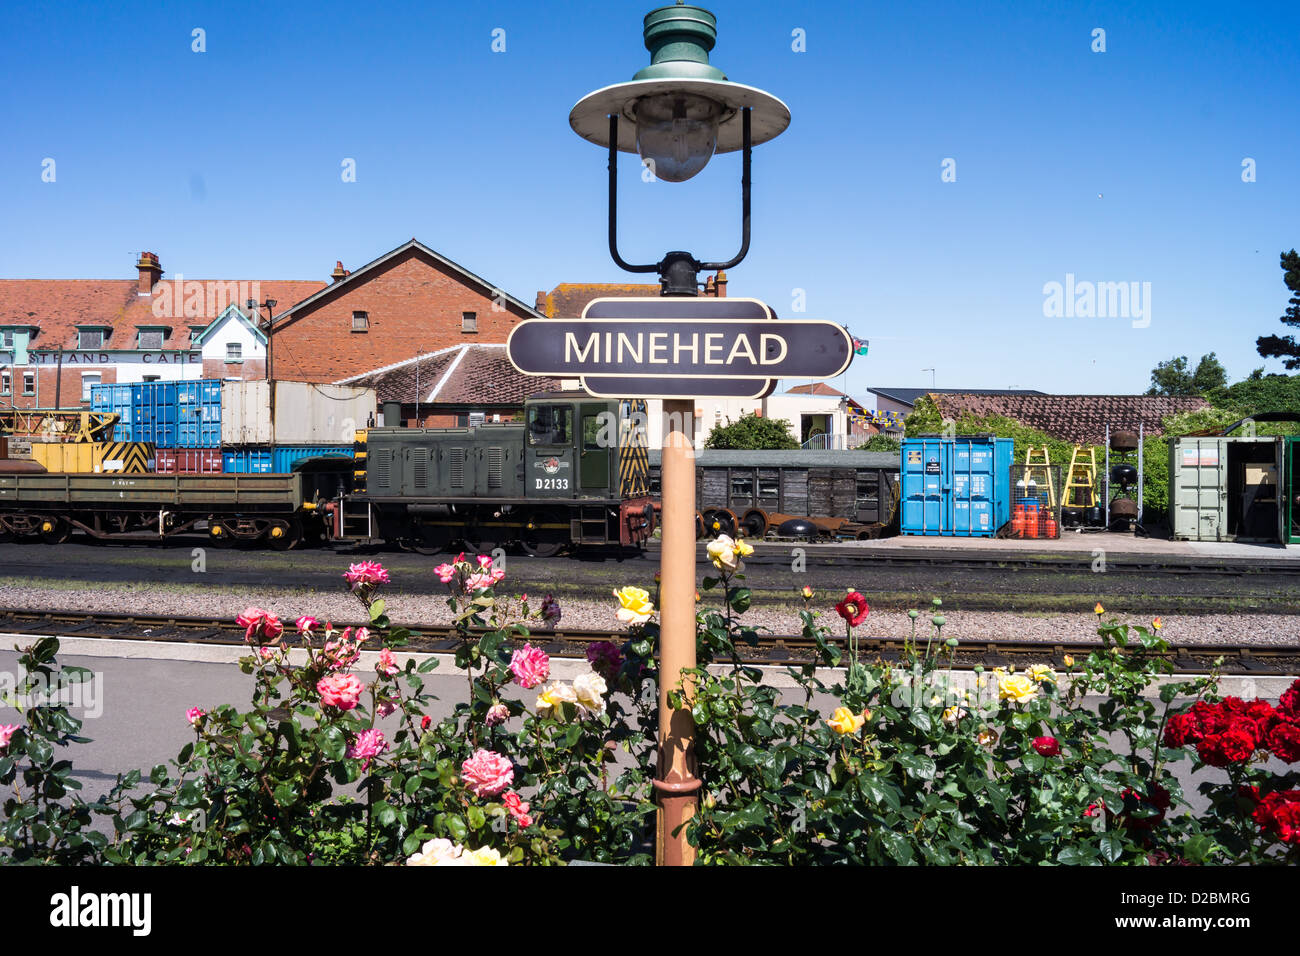 Minehead station platform Stock Photo